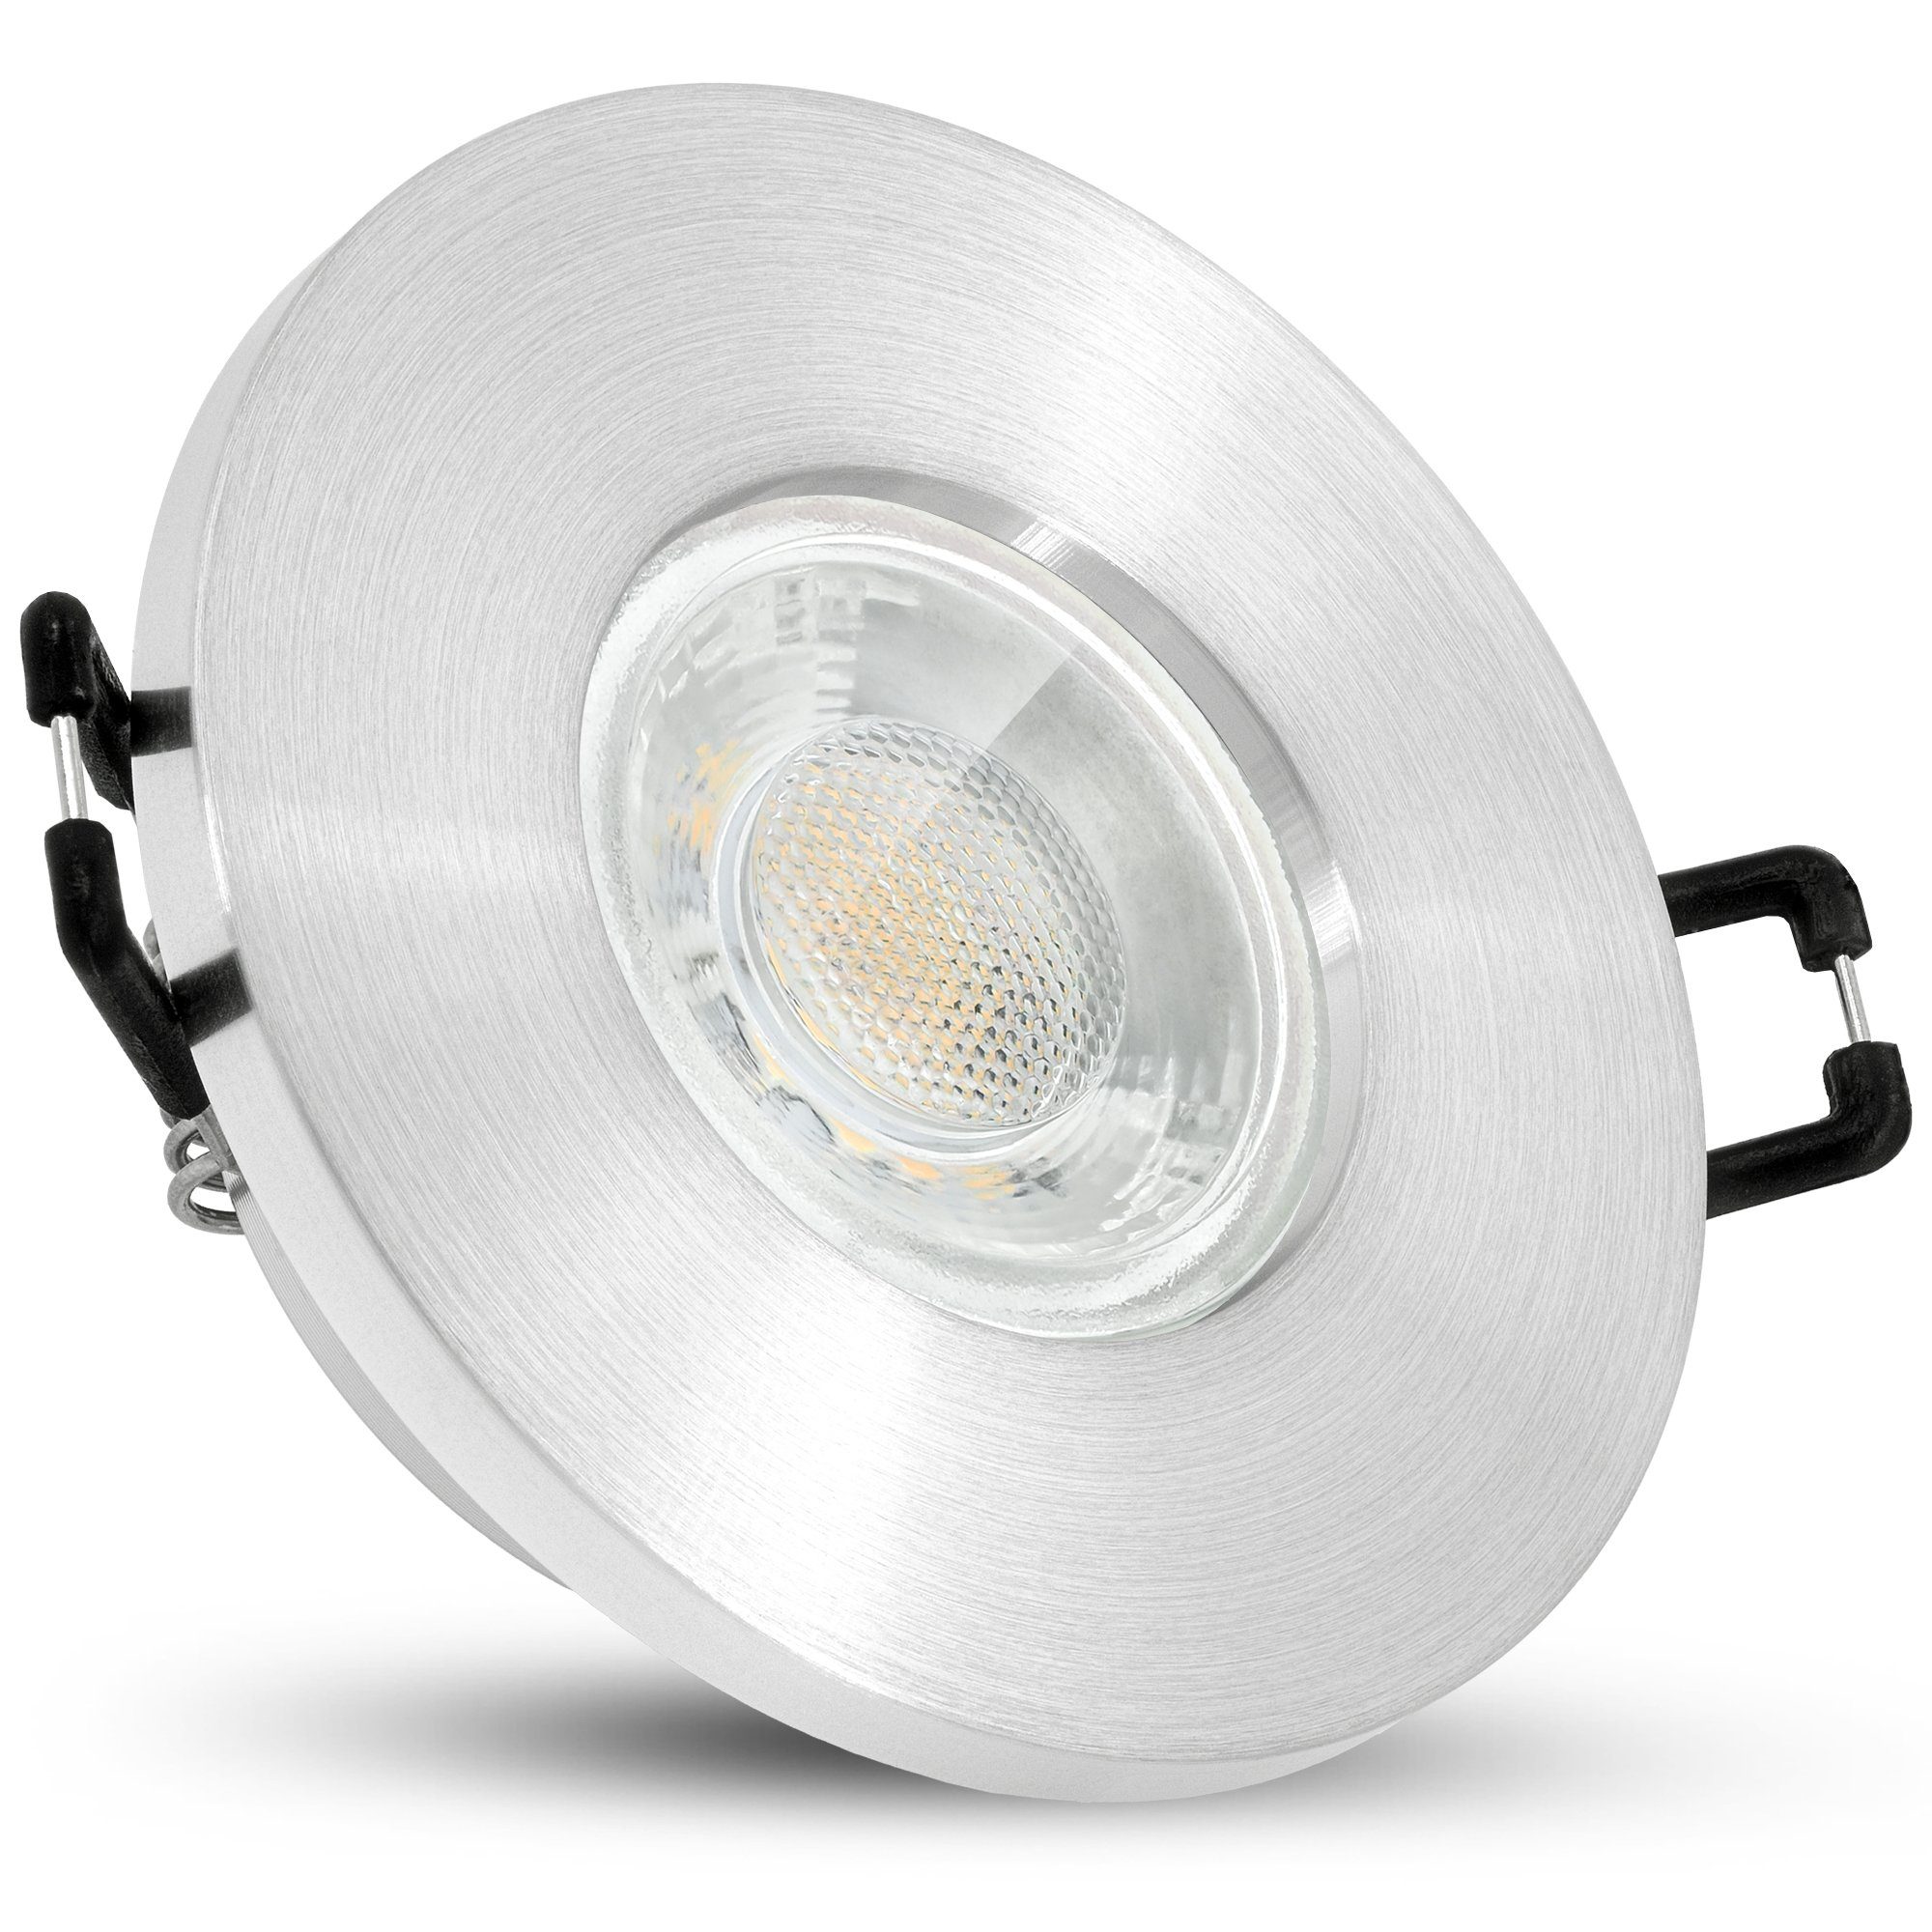 Leuchtmittel linovum Edelstahl, Leuchtmittel - gebuerstete 3W IP65 LED inklusive, 230V GU10 LED warmweiss inklusive Einbaustrahler Einbaustrahler